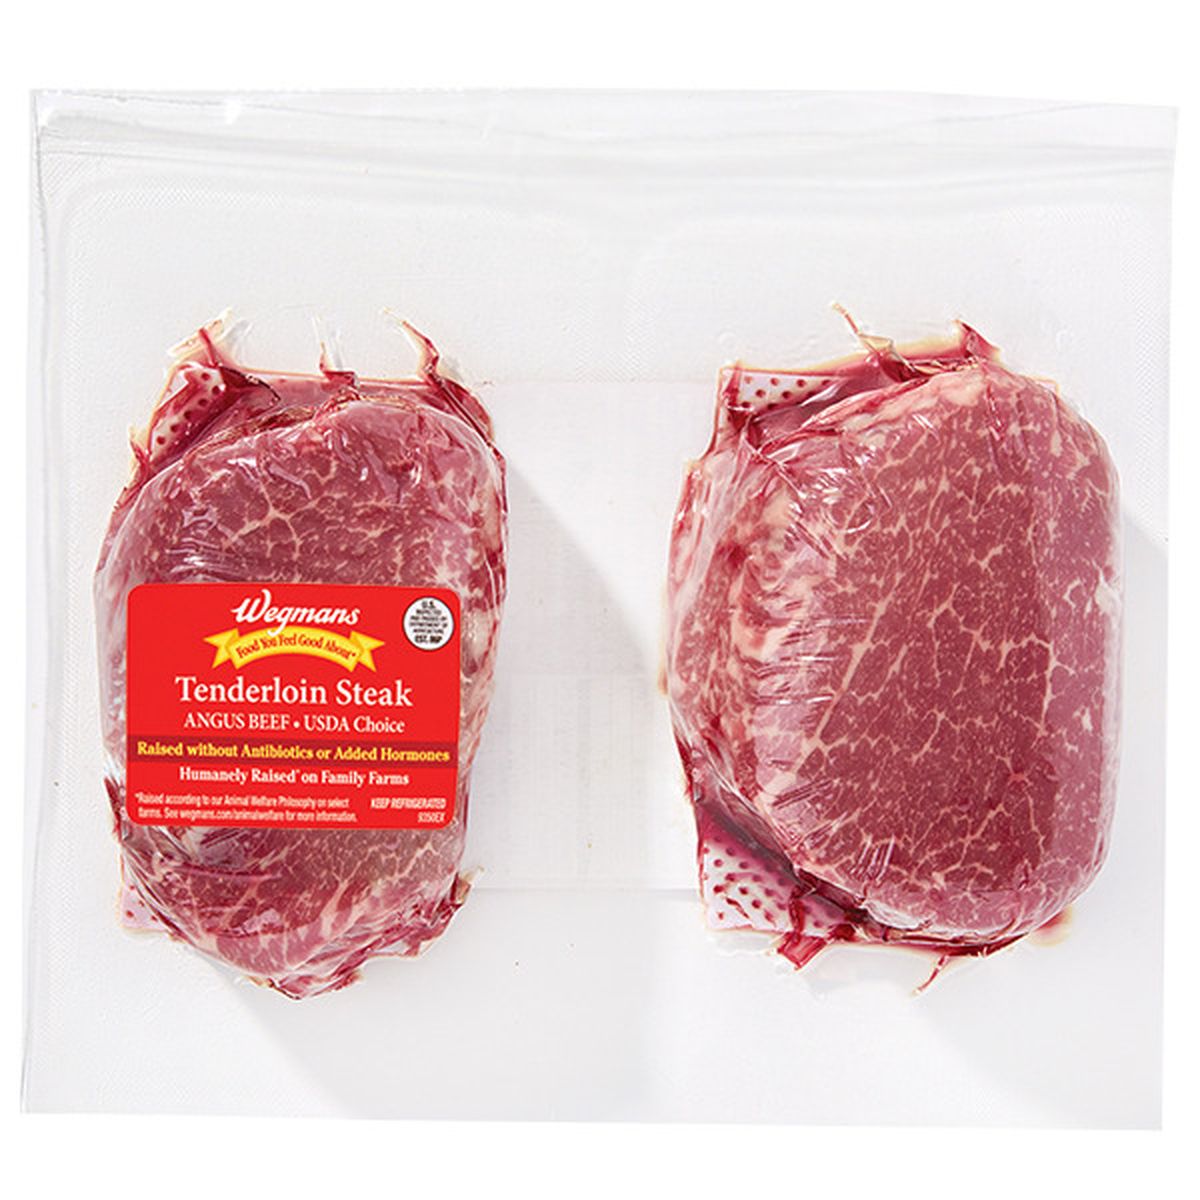 Calories in Wegmans Choice Angus Tenderloin Steak